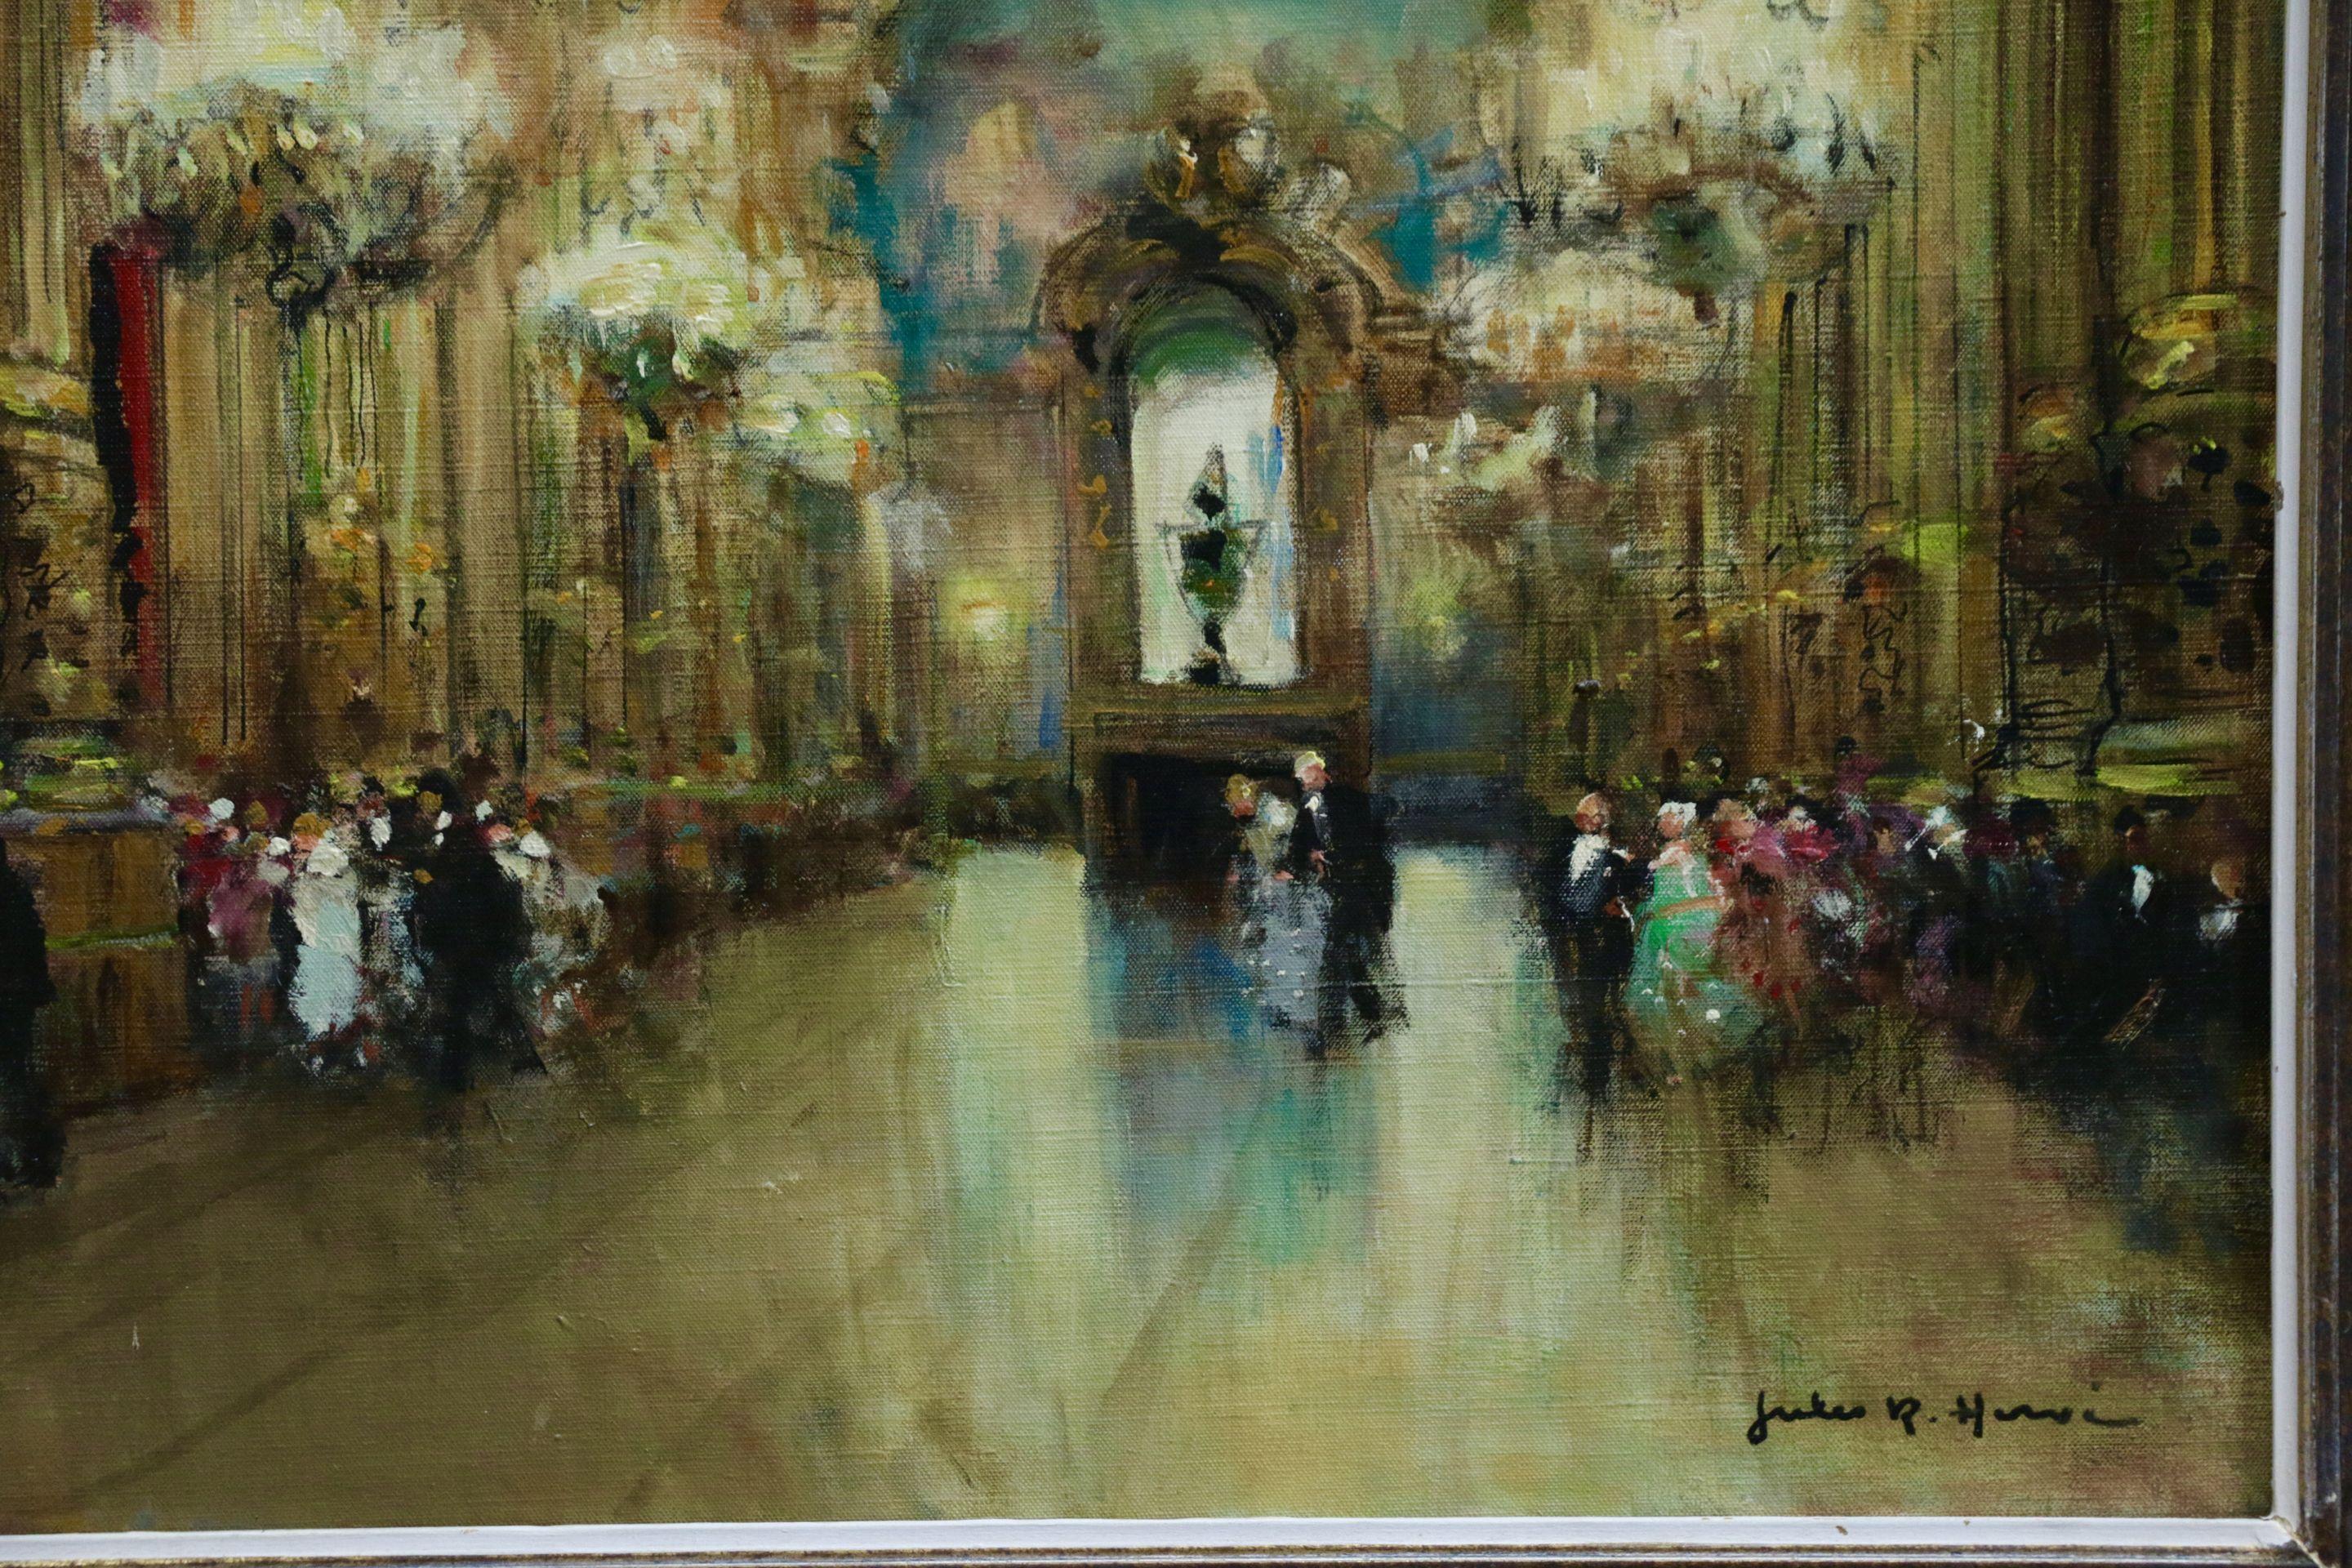 Opera Garnier - Paris - 20th Century Oil, Elegant Figures in Interior by Herve - Impressionist Painting by Jules René Hervé